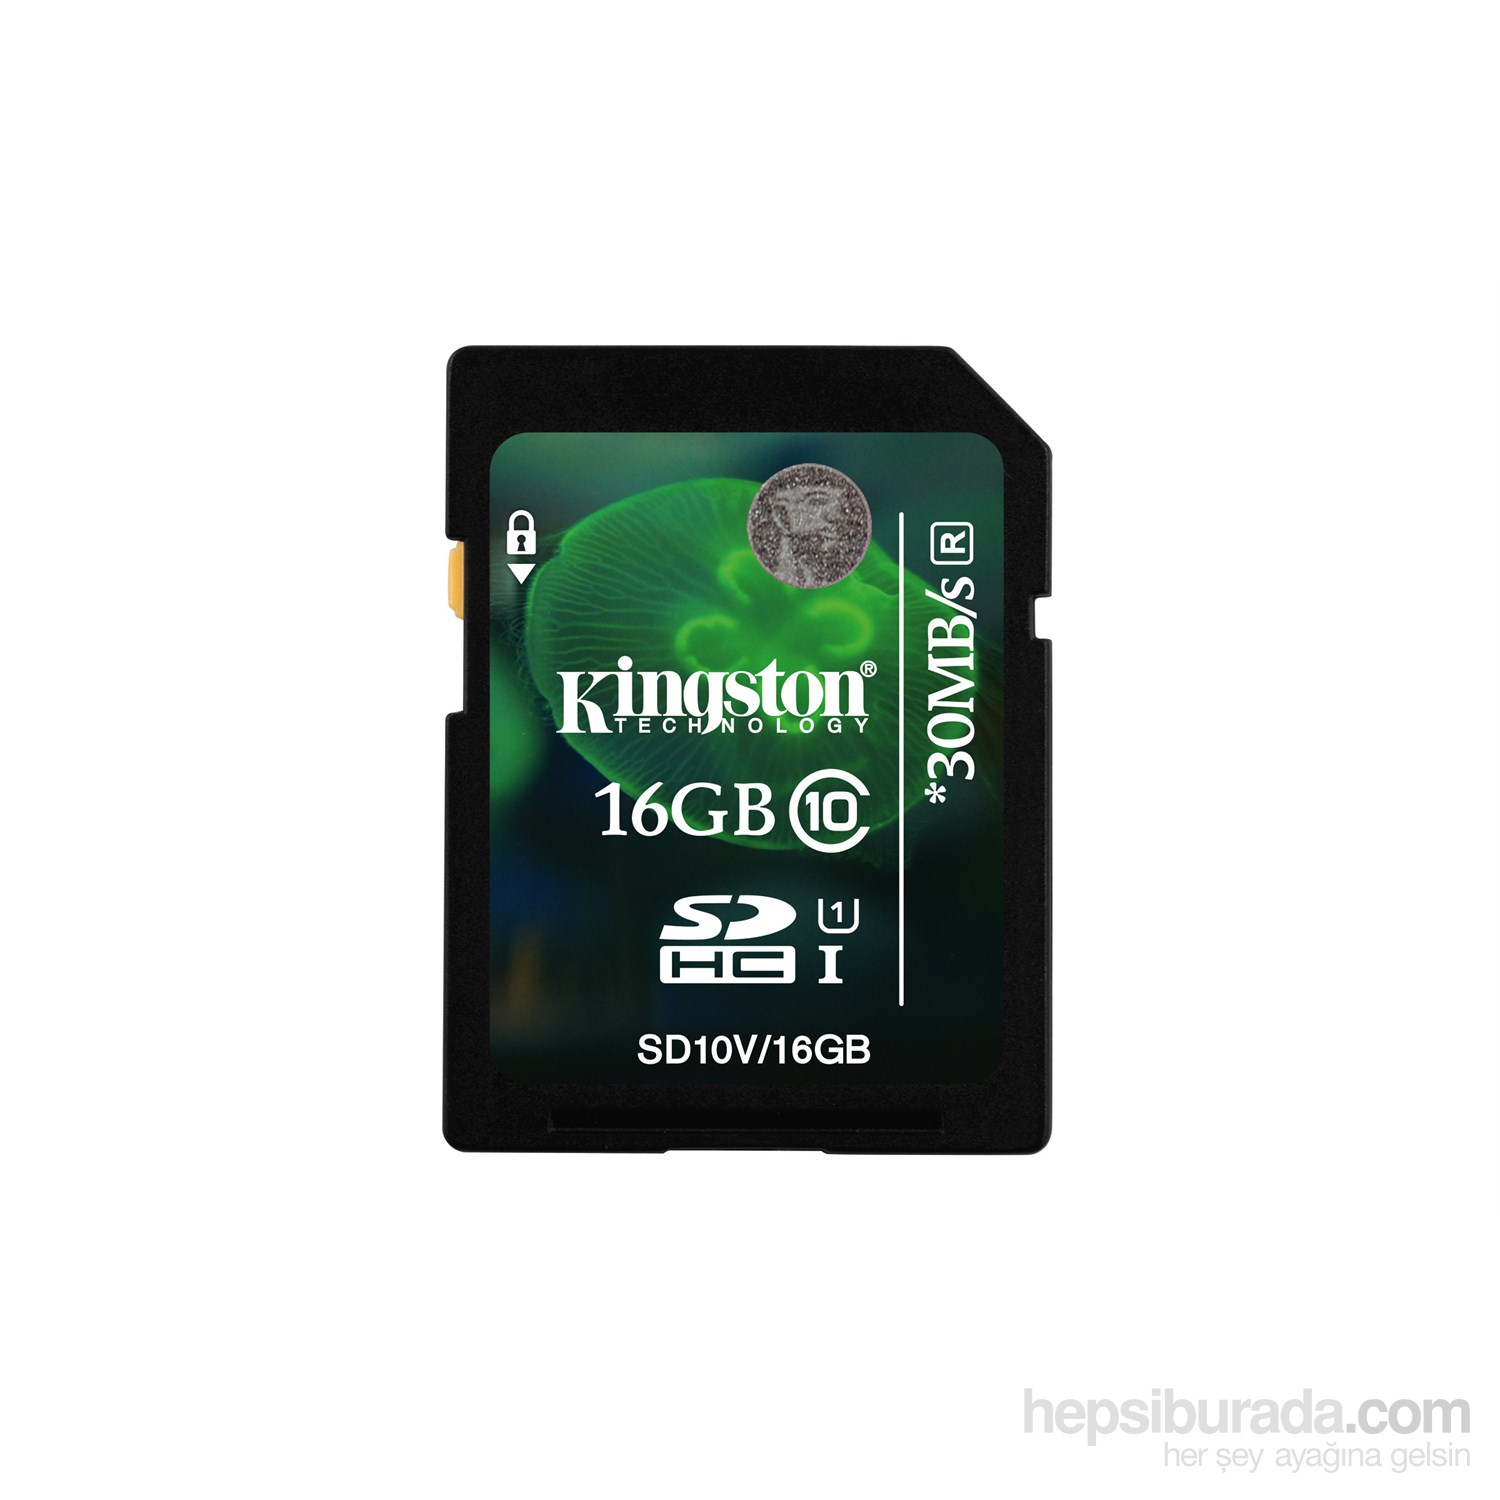 Kingston 16GB SDHC Class 10 UHS-I Hafıza Kartı SD10V/16GB